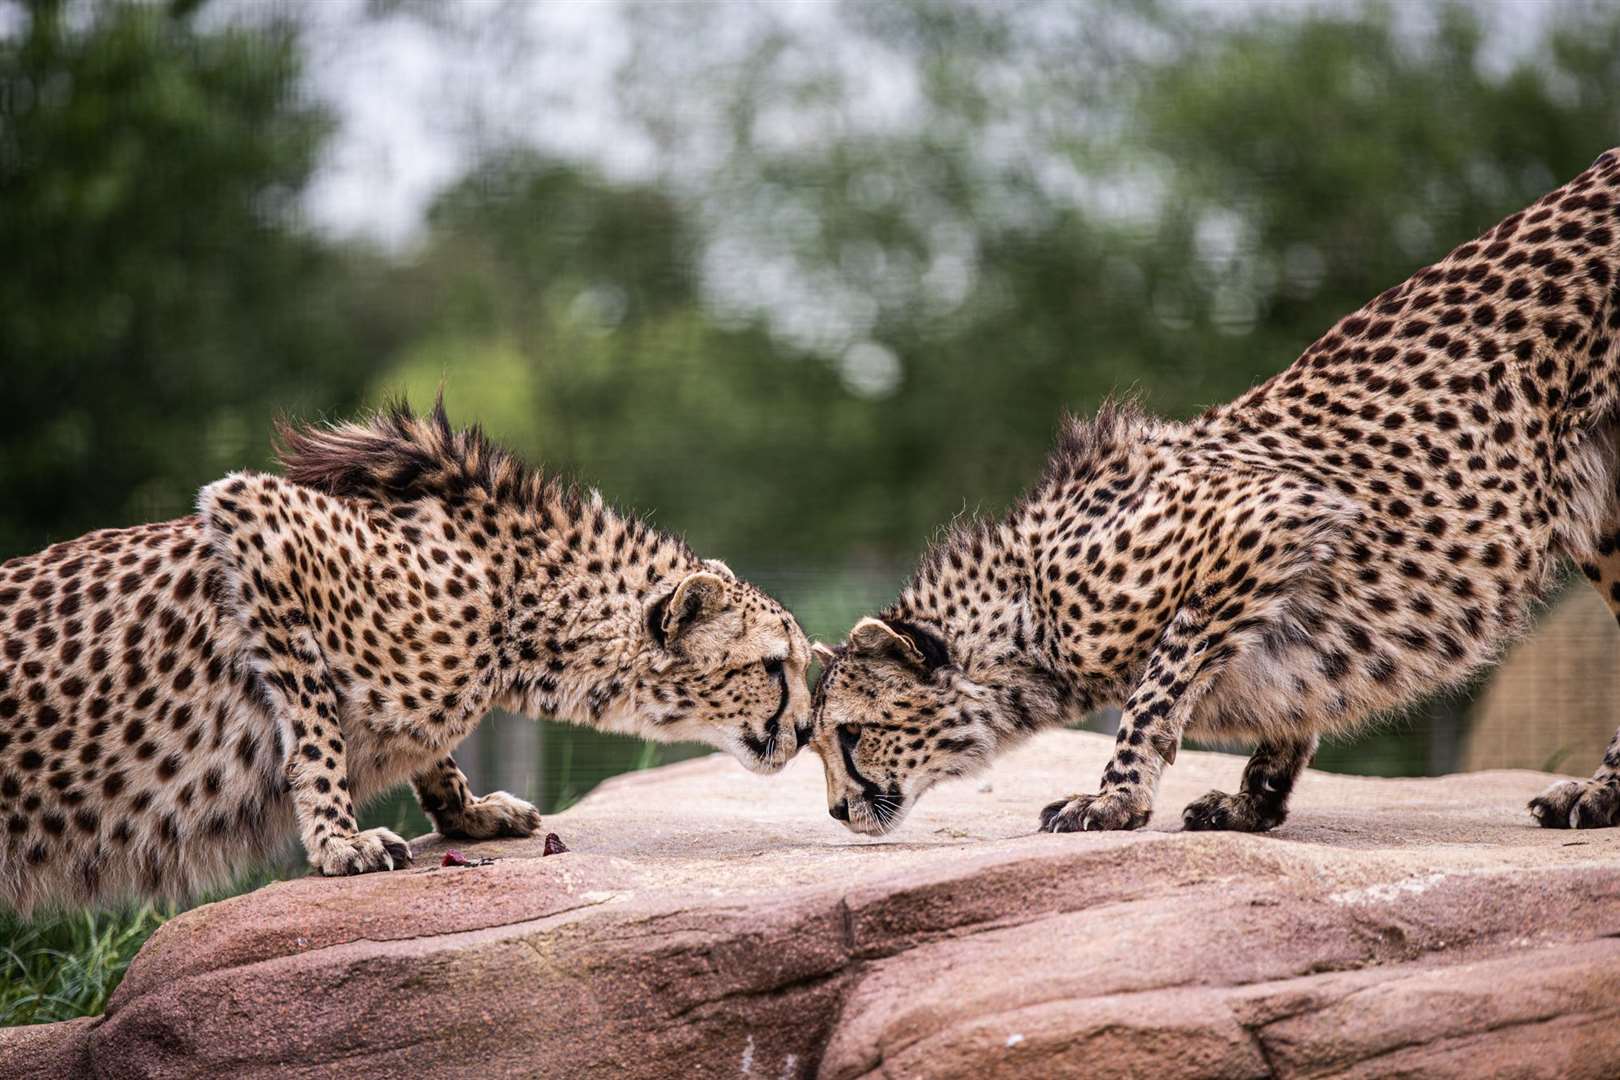 Less than 7,000 cheetahs remain in the wild. Picture: DS TECHEETAH